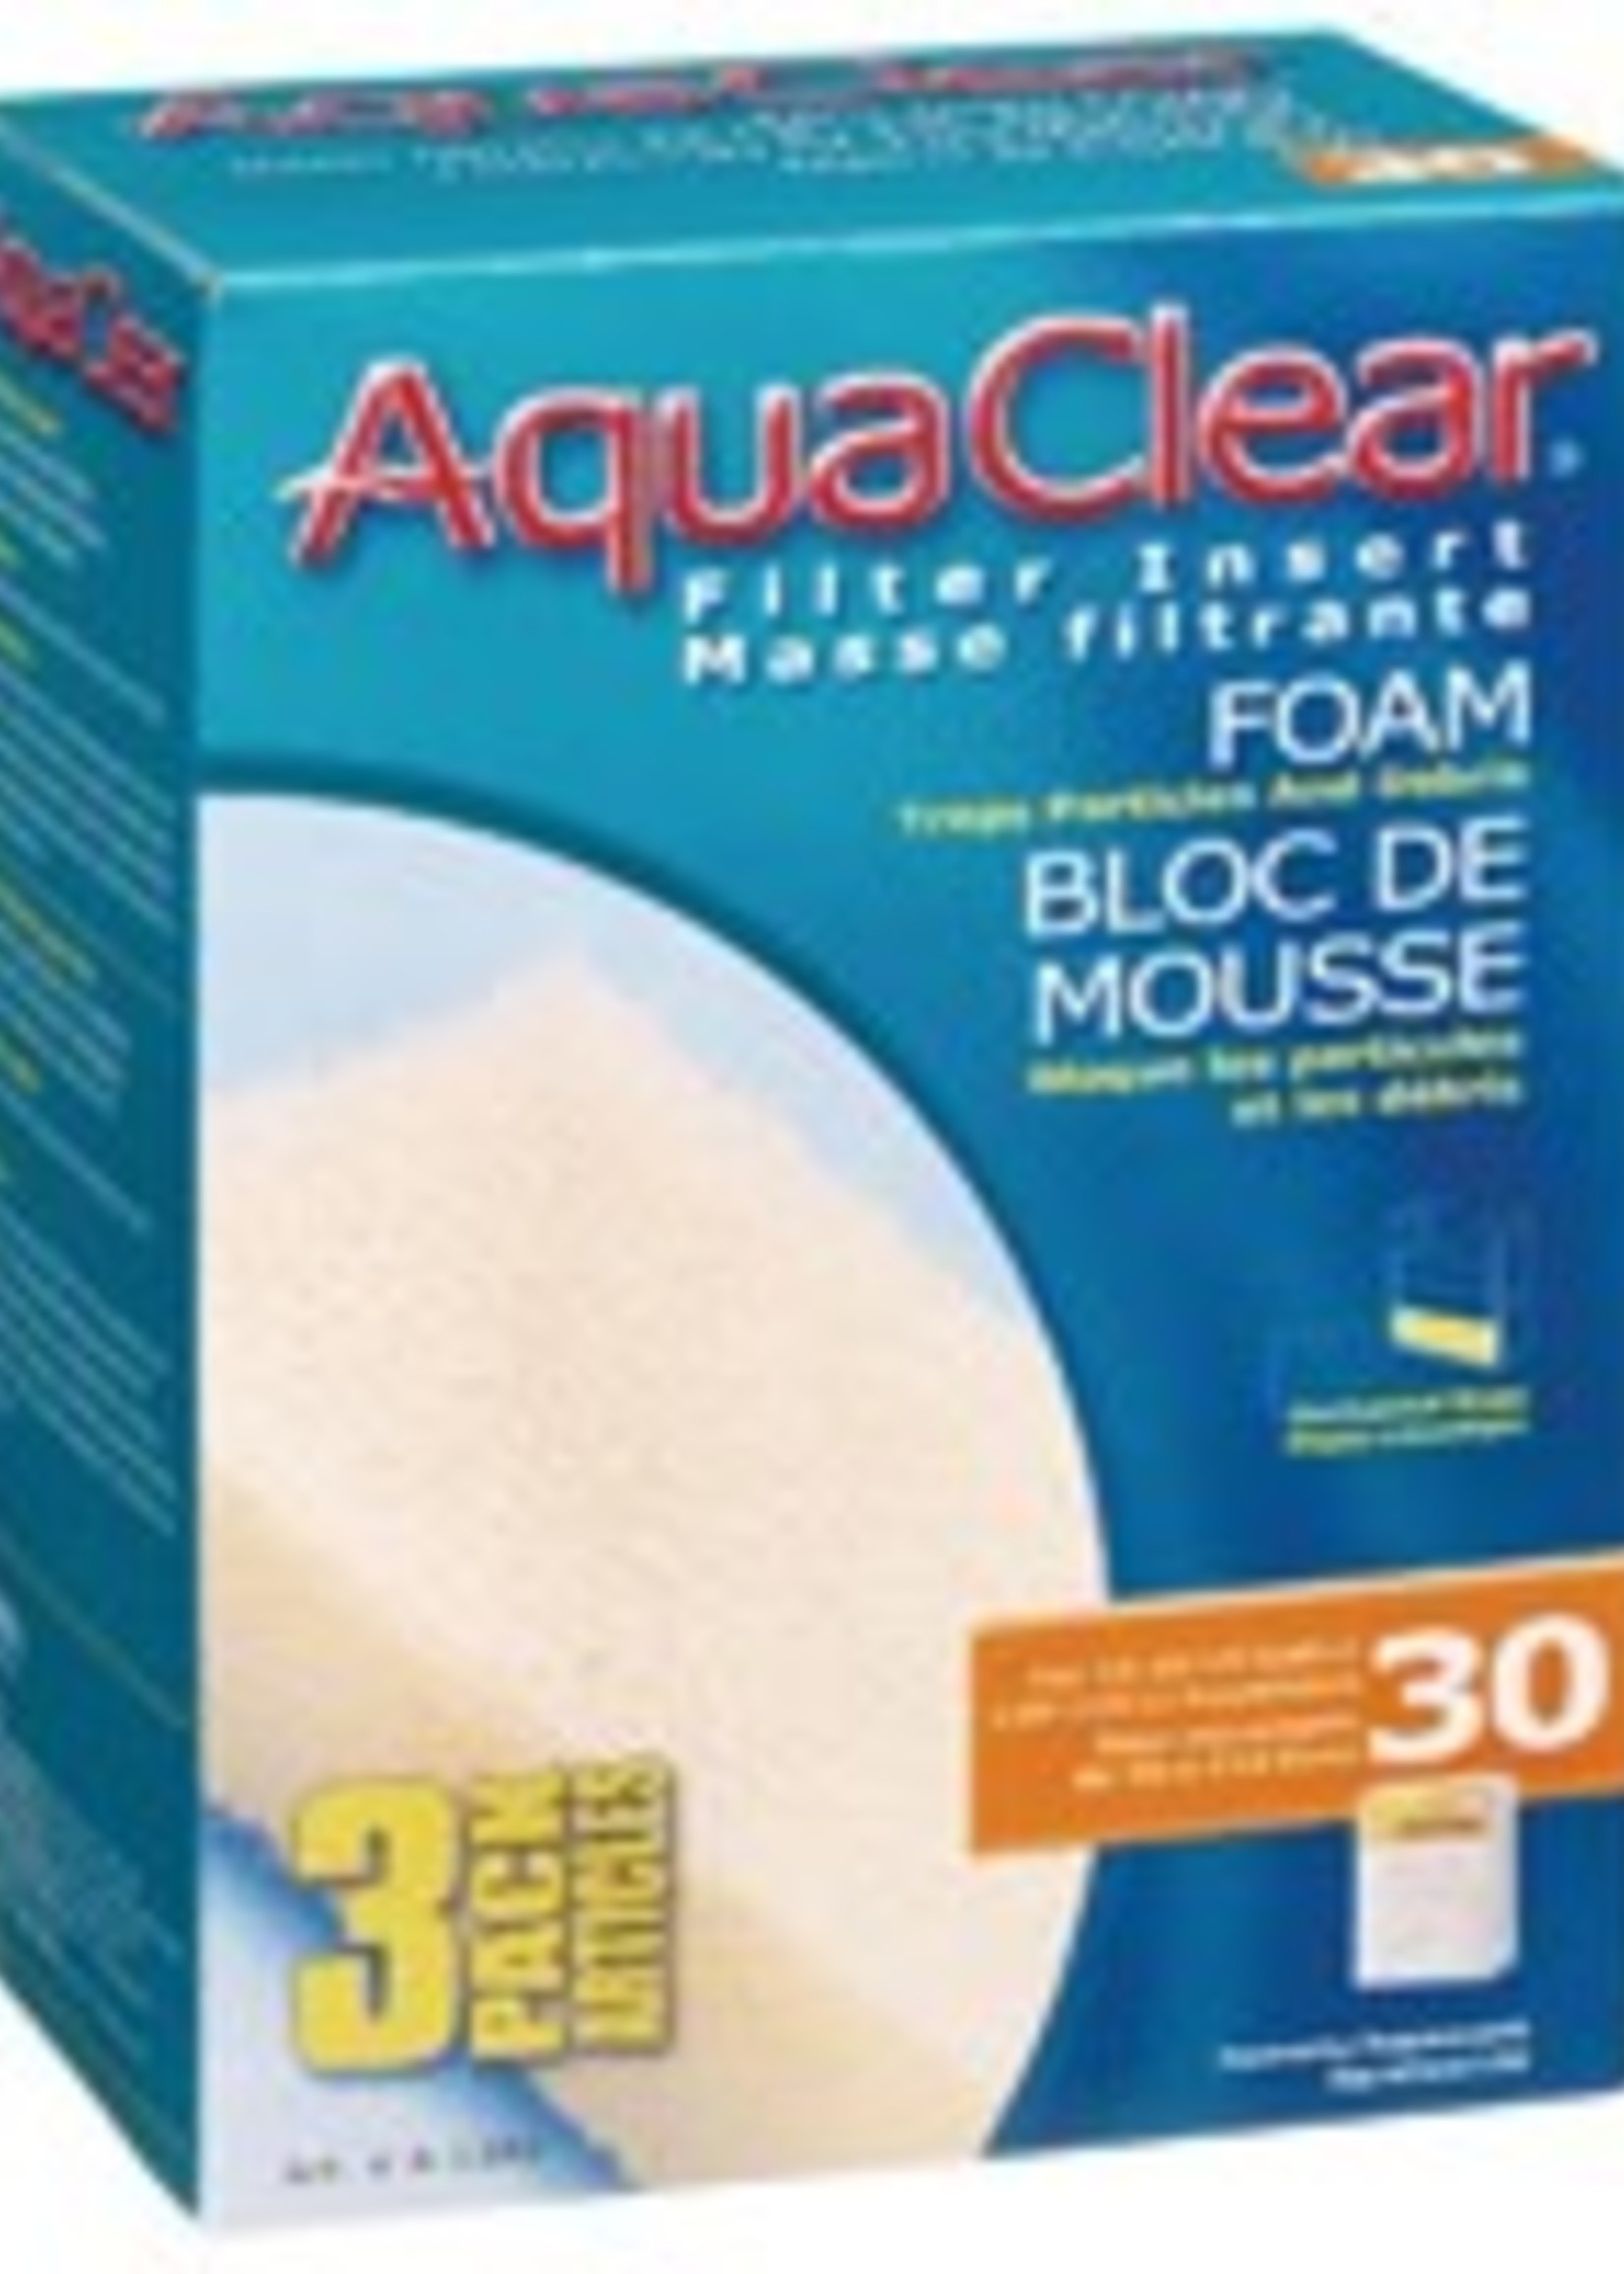 AquaClear 30 Foam Insert (3/pack)